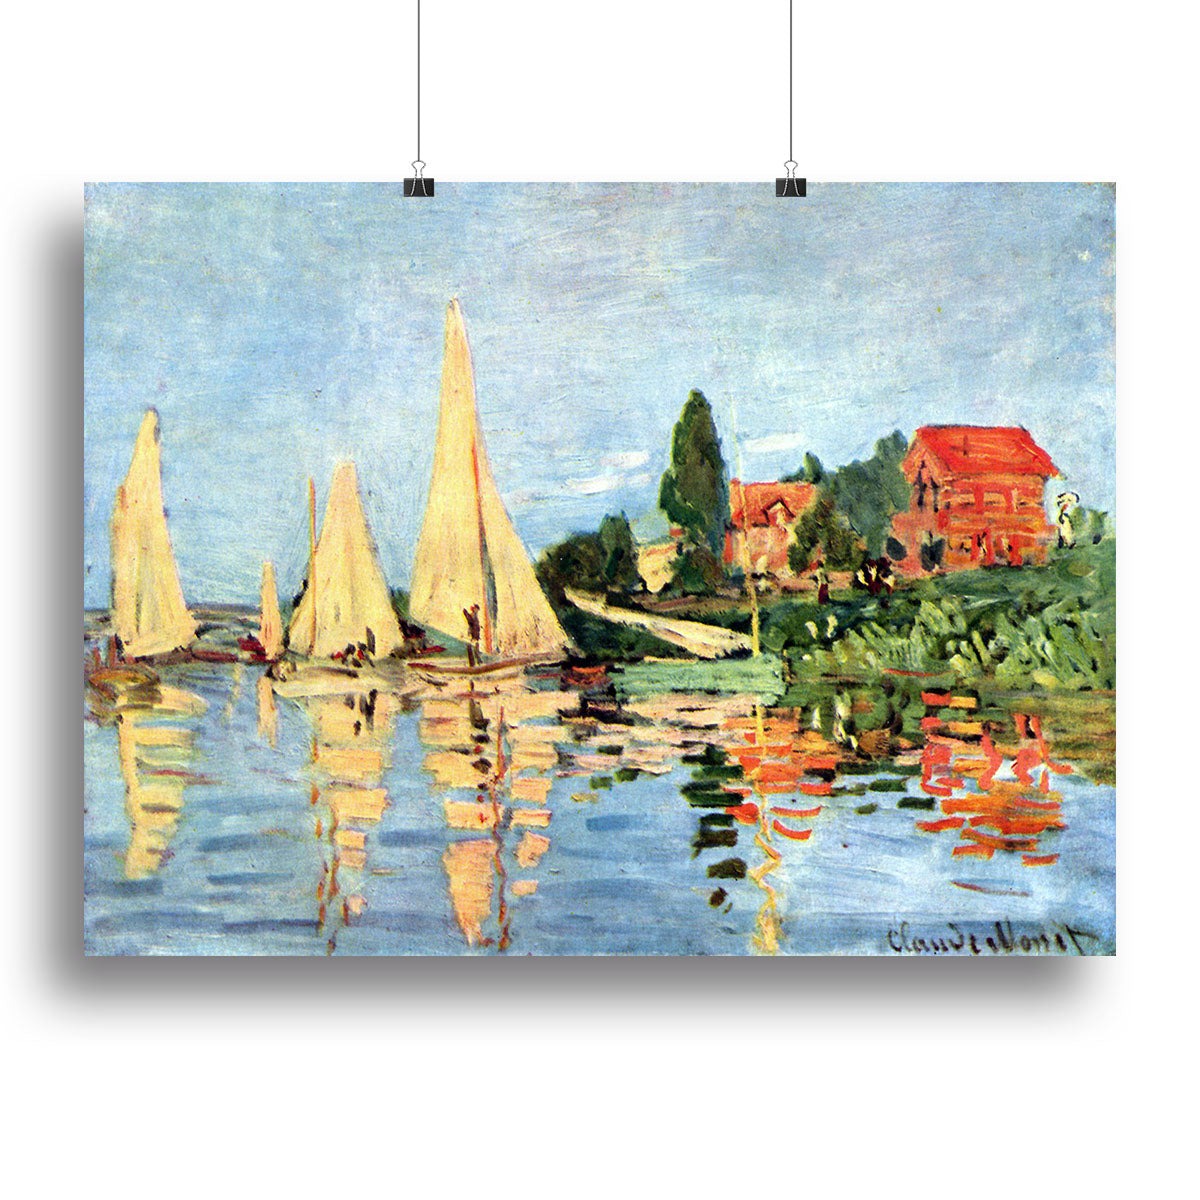 Regatta at Argenteuil by Monet Canvas Print or Poster - Canvas Art Rocks - 2